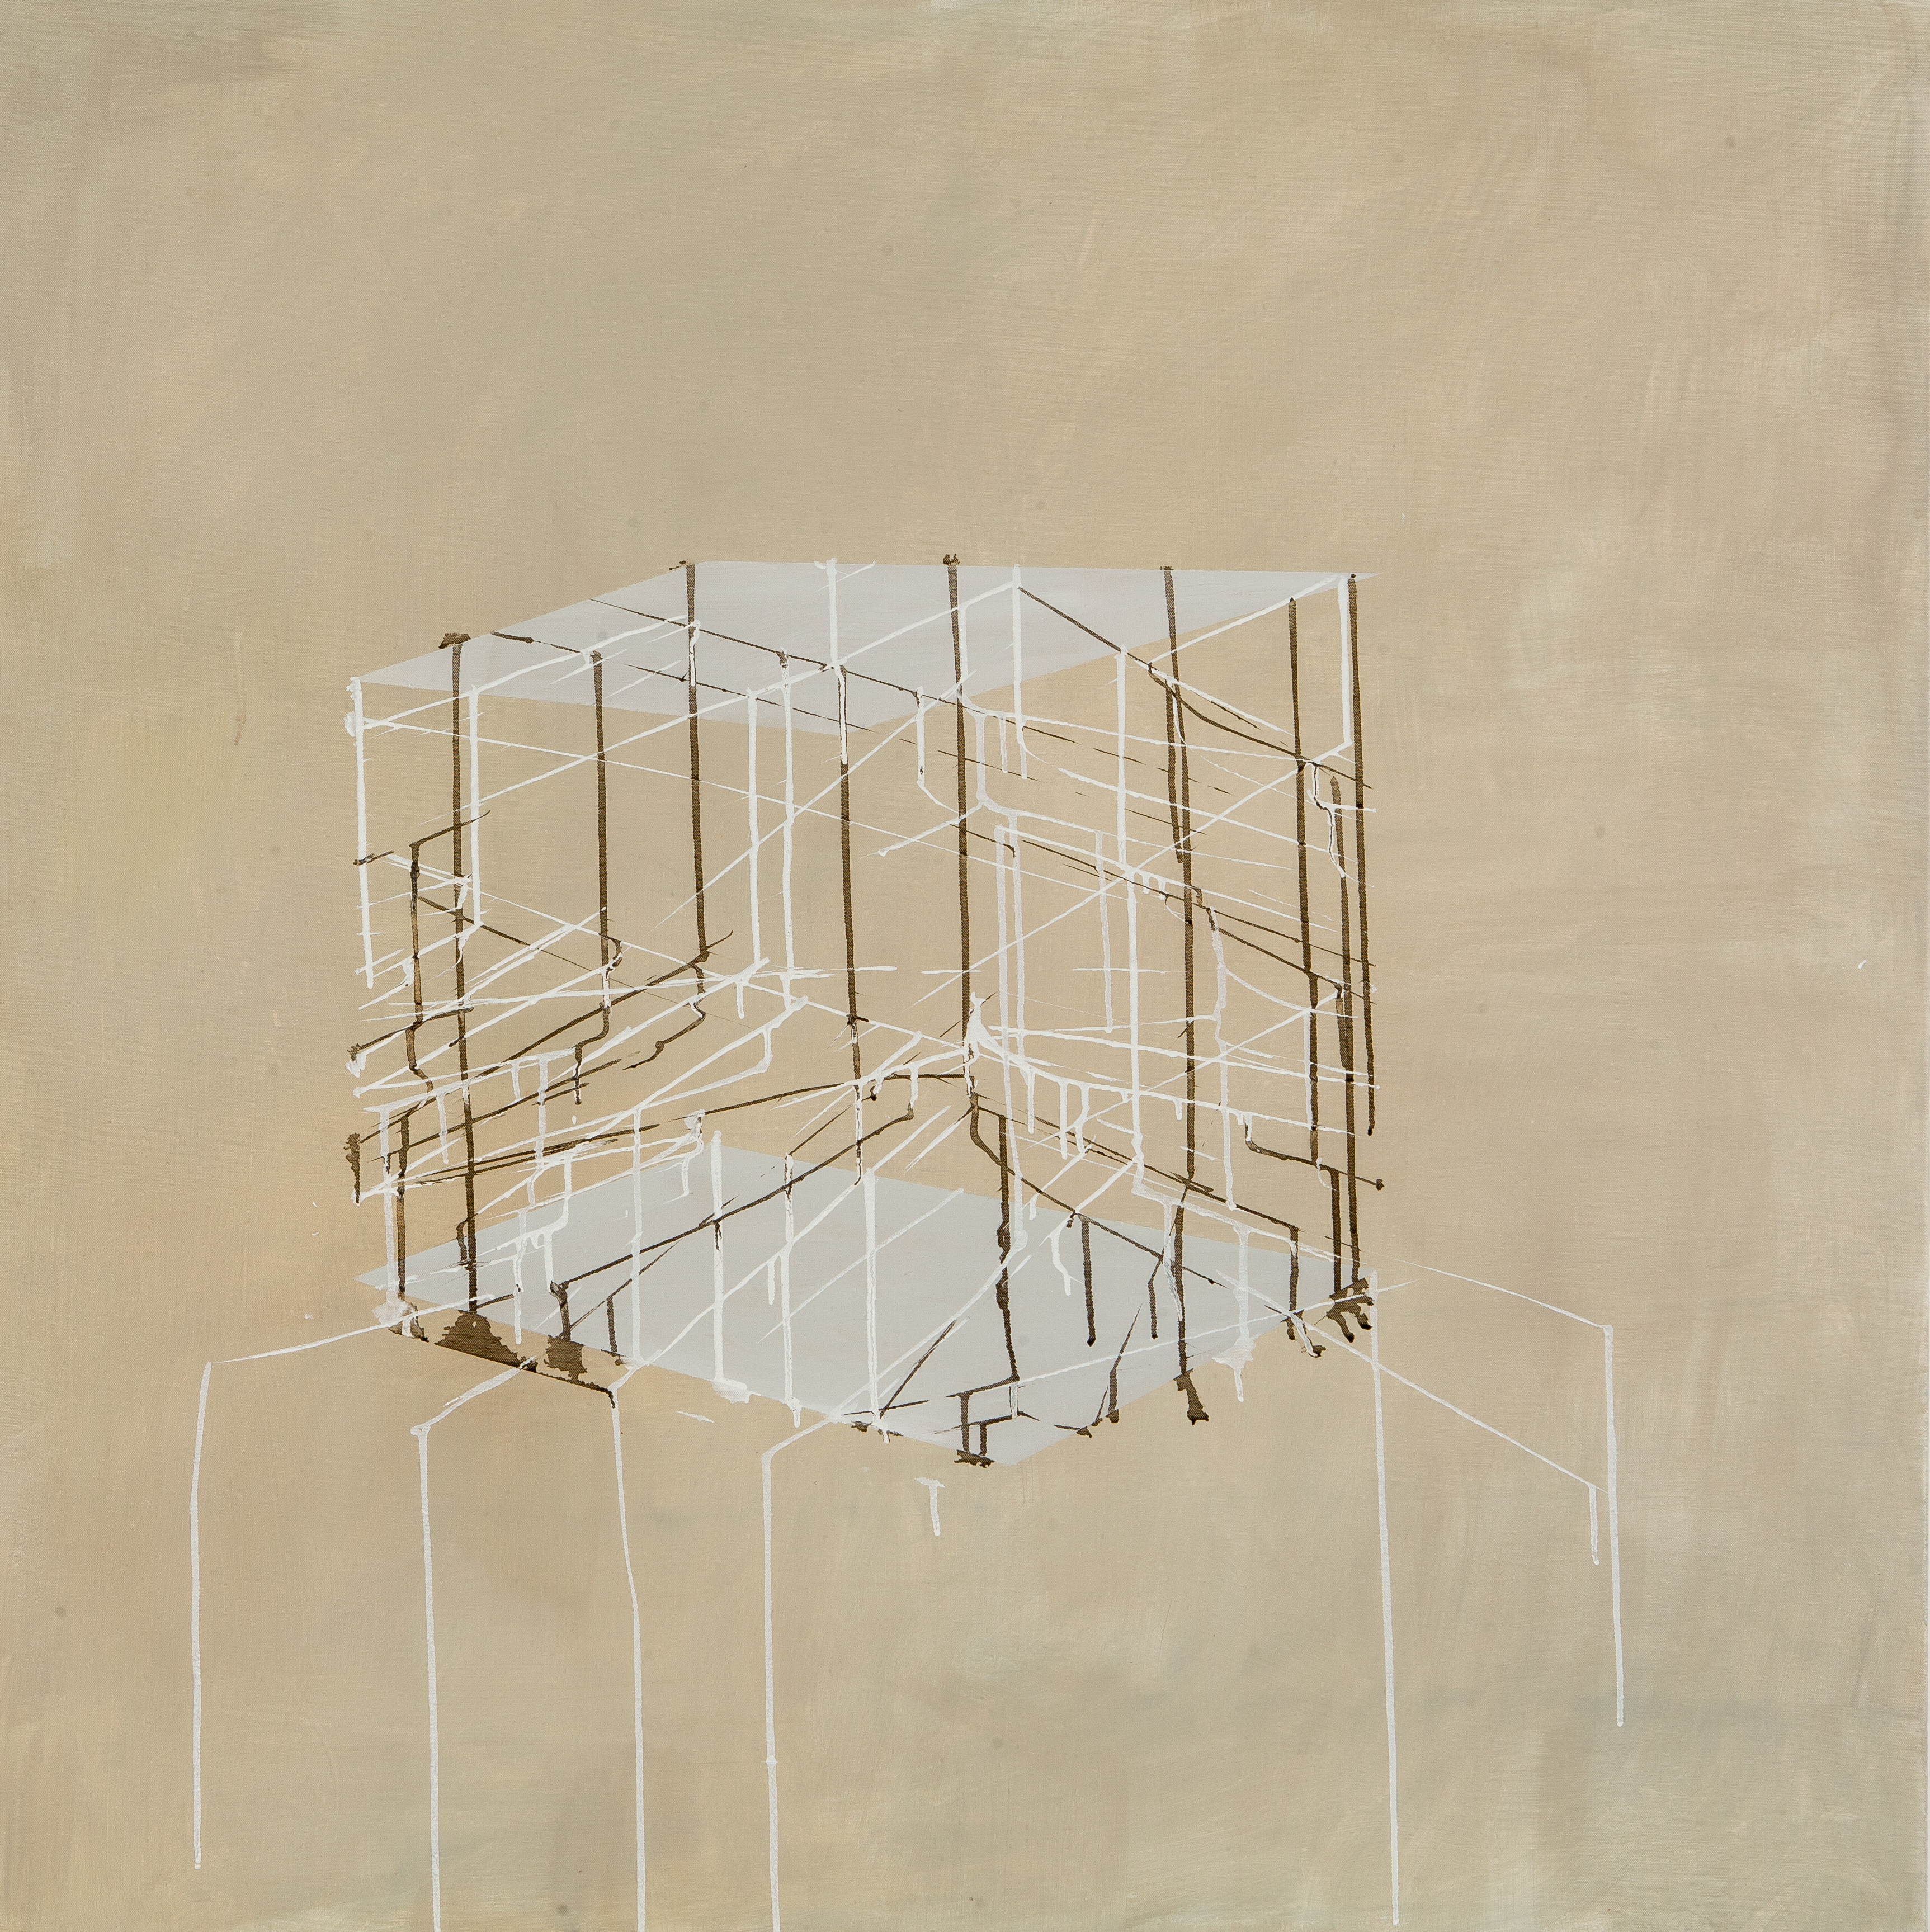 Cage by Antonietta Grassi.